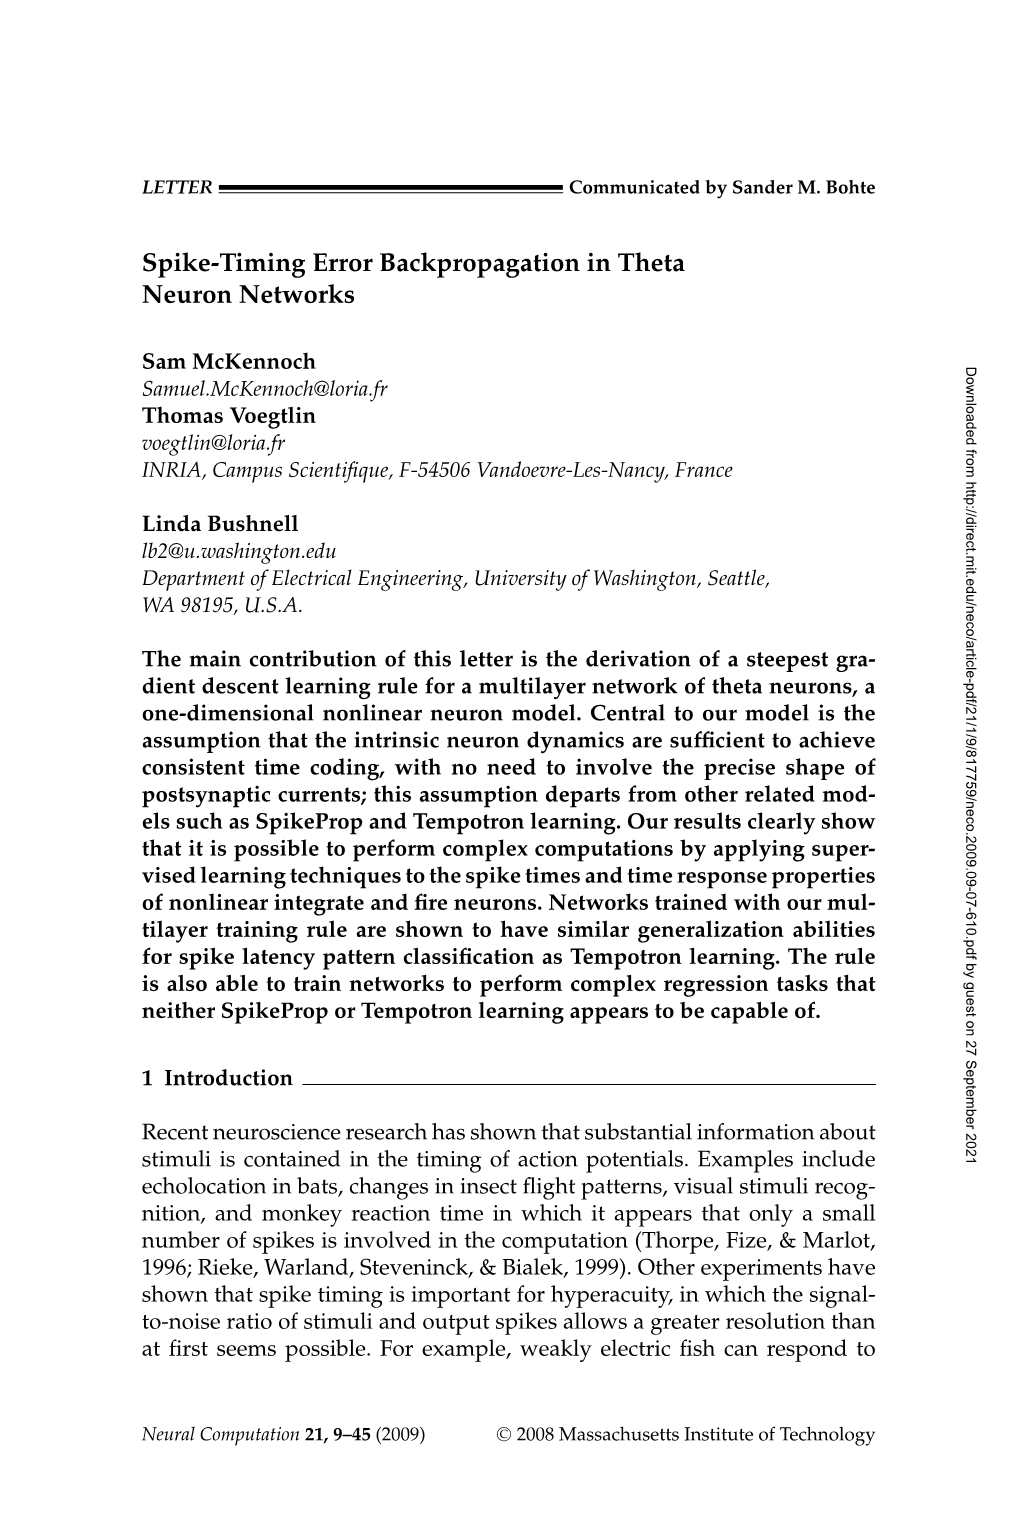 Spike-Timing Error Backpropagation in Theta Neuron Networks